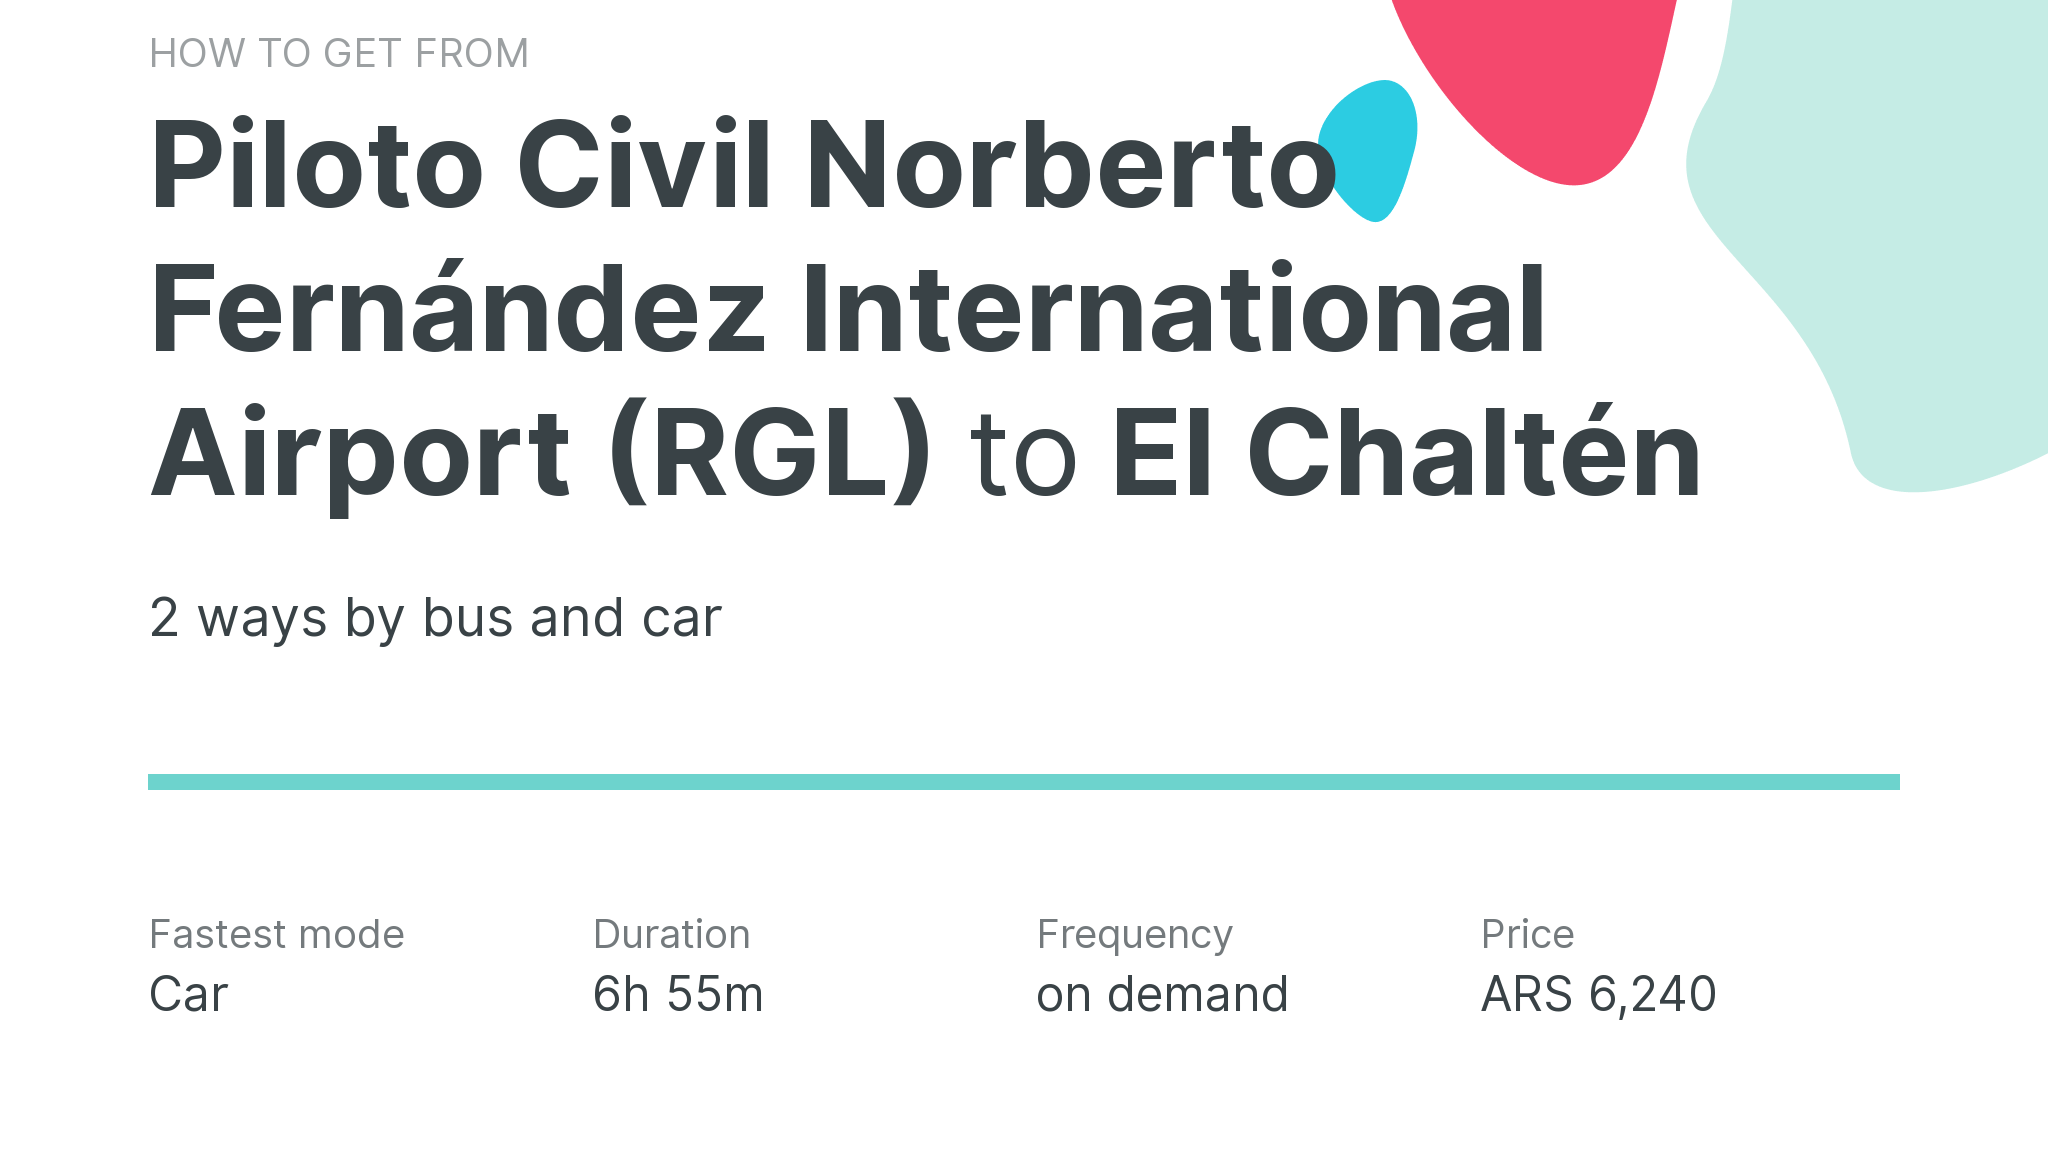 How do I get from Piloto Civil Norberto Fernández International Airport (RGL) to El Chaltén